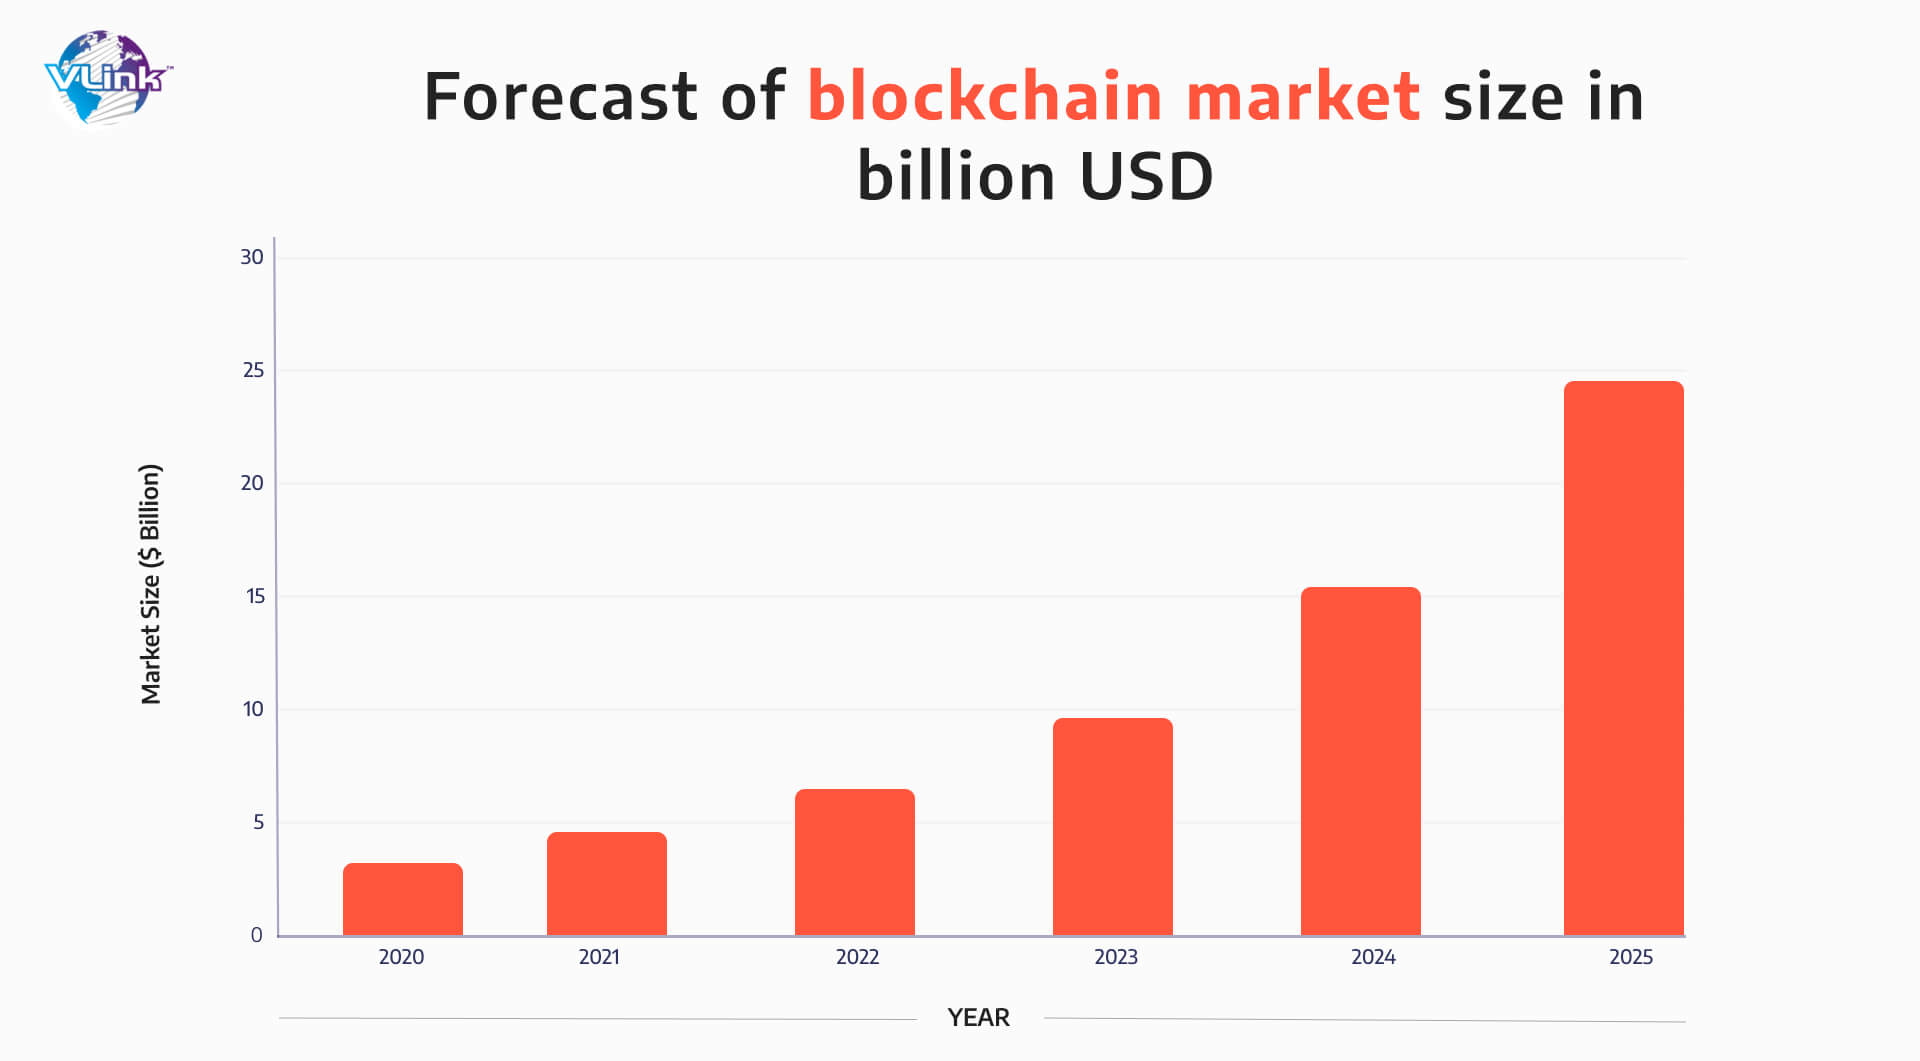 Forecast of blockchain market size in billion USD